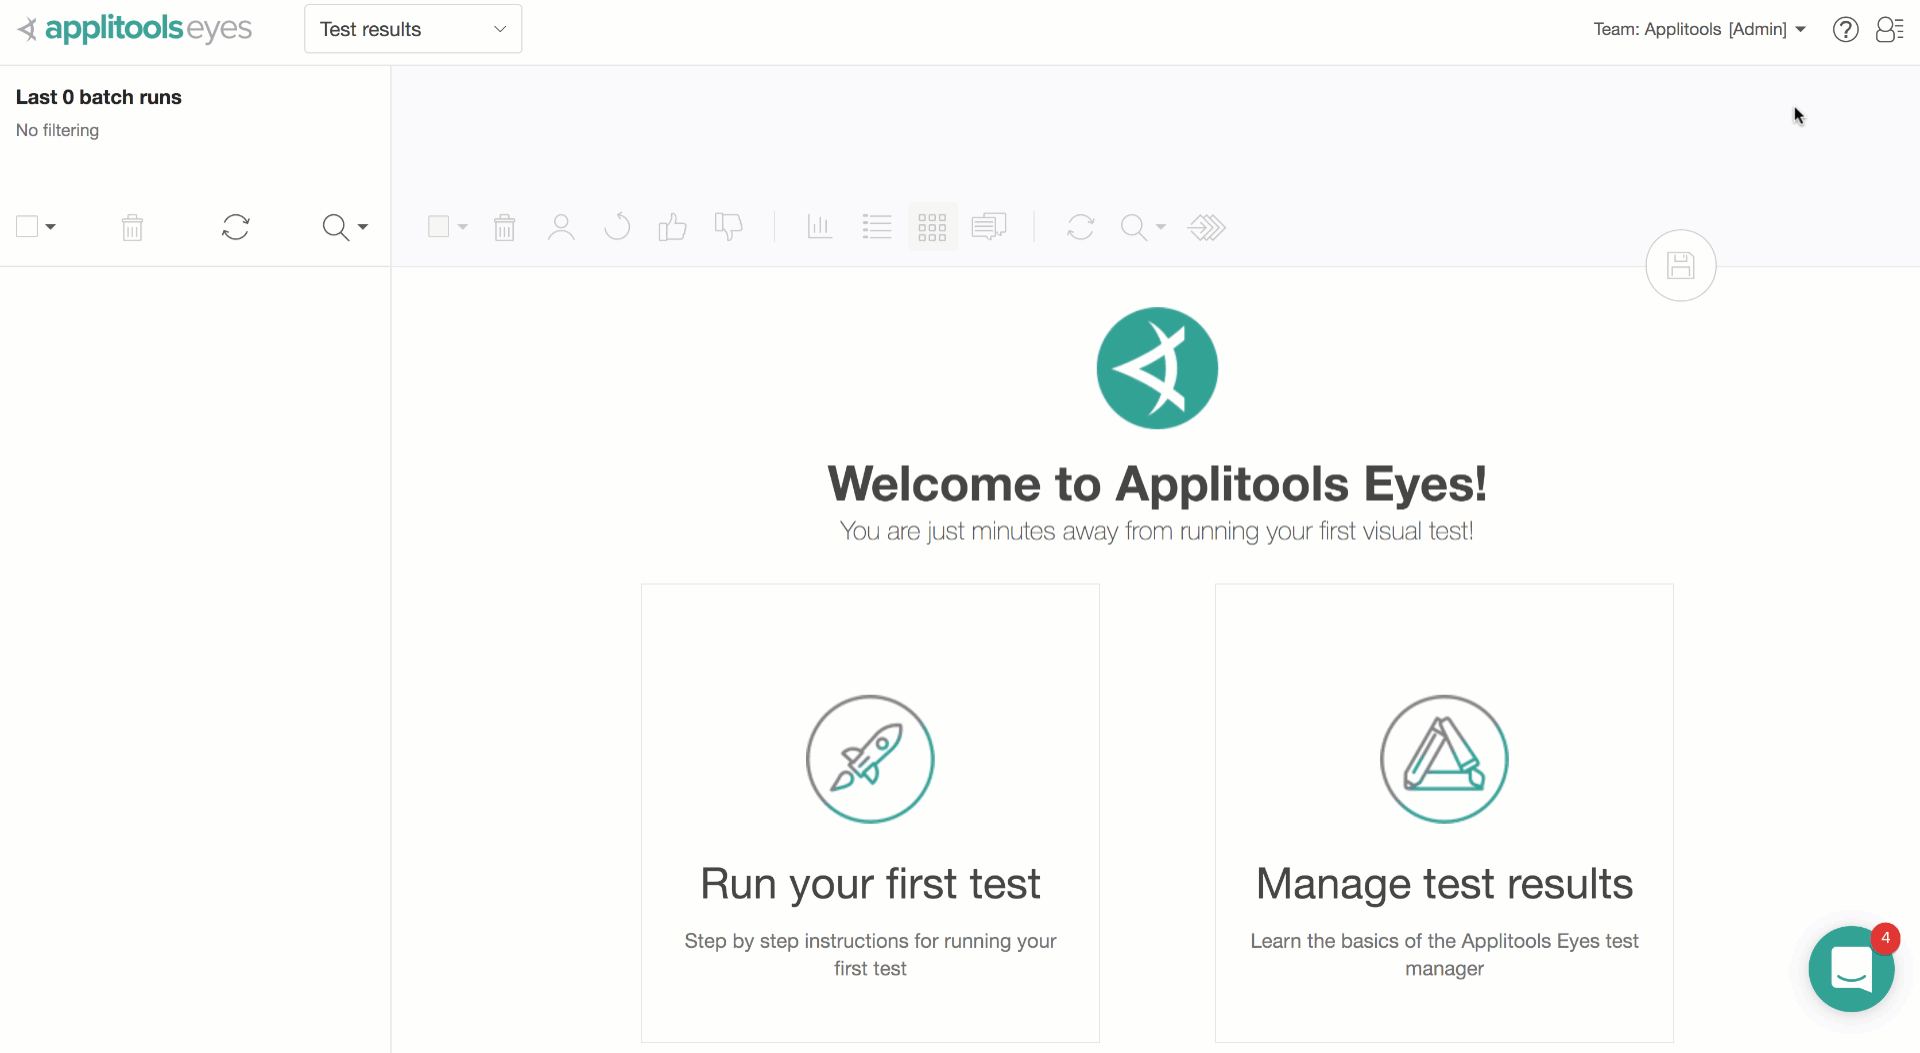 personal Applitools API key